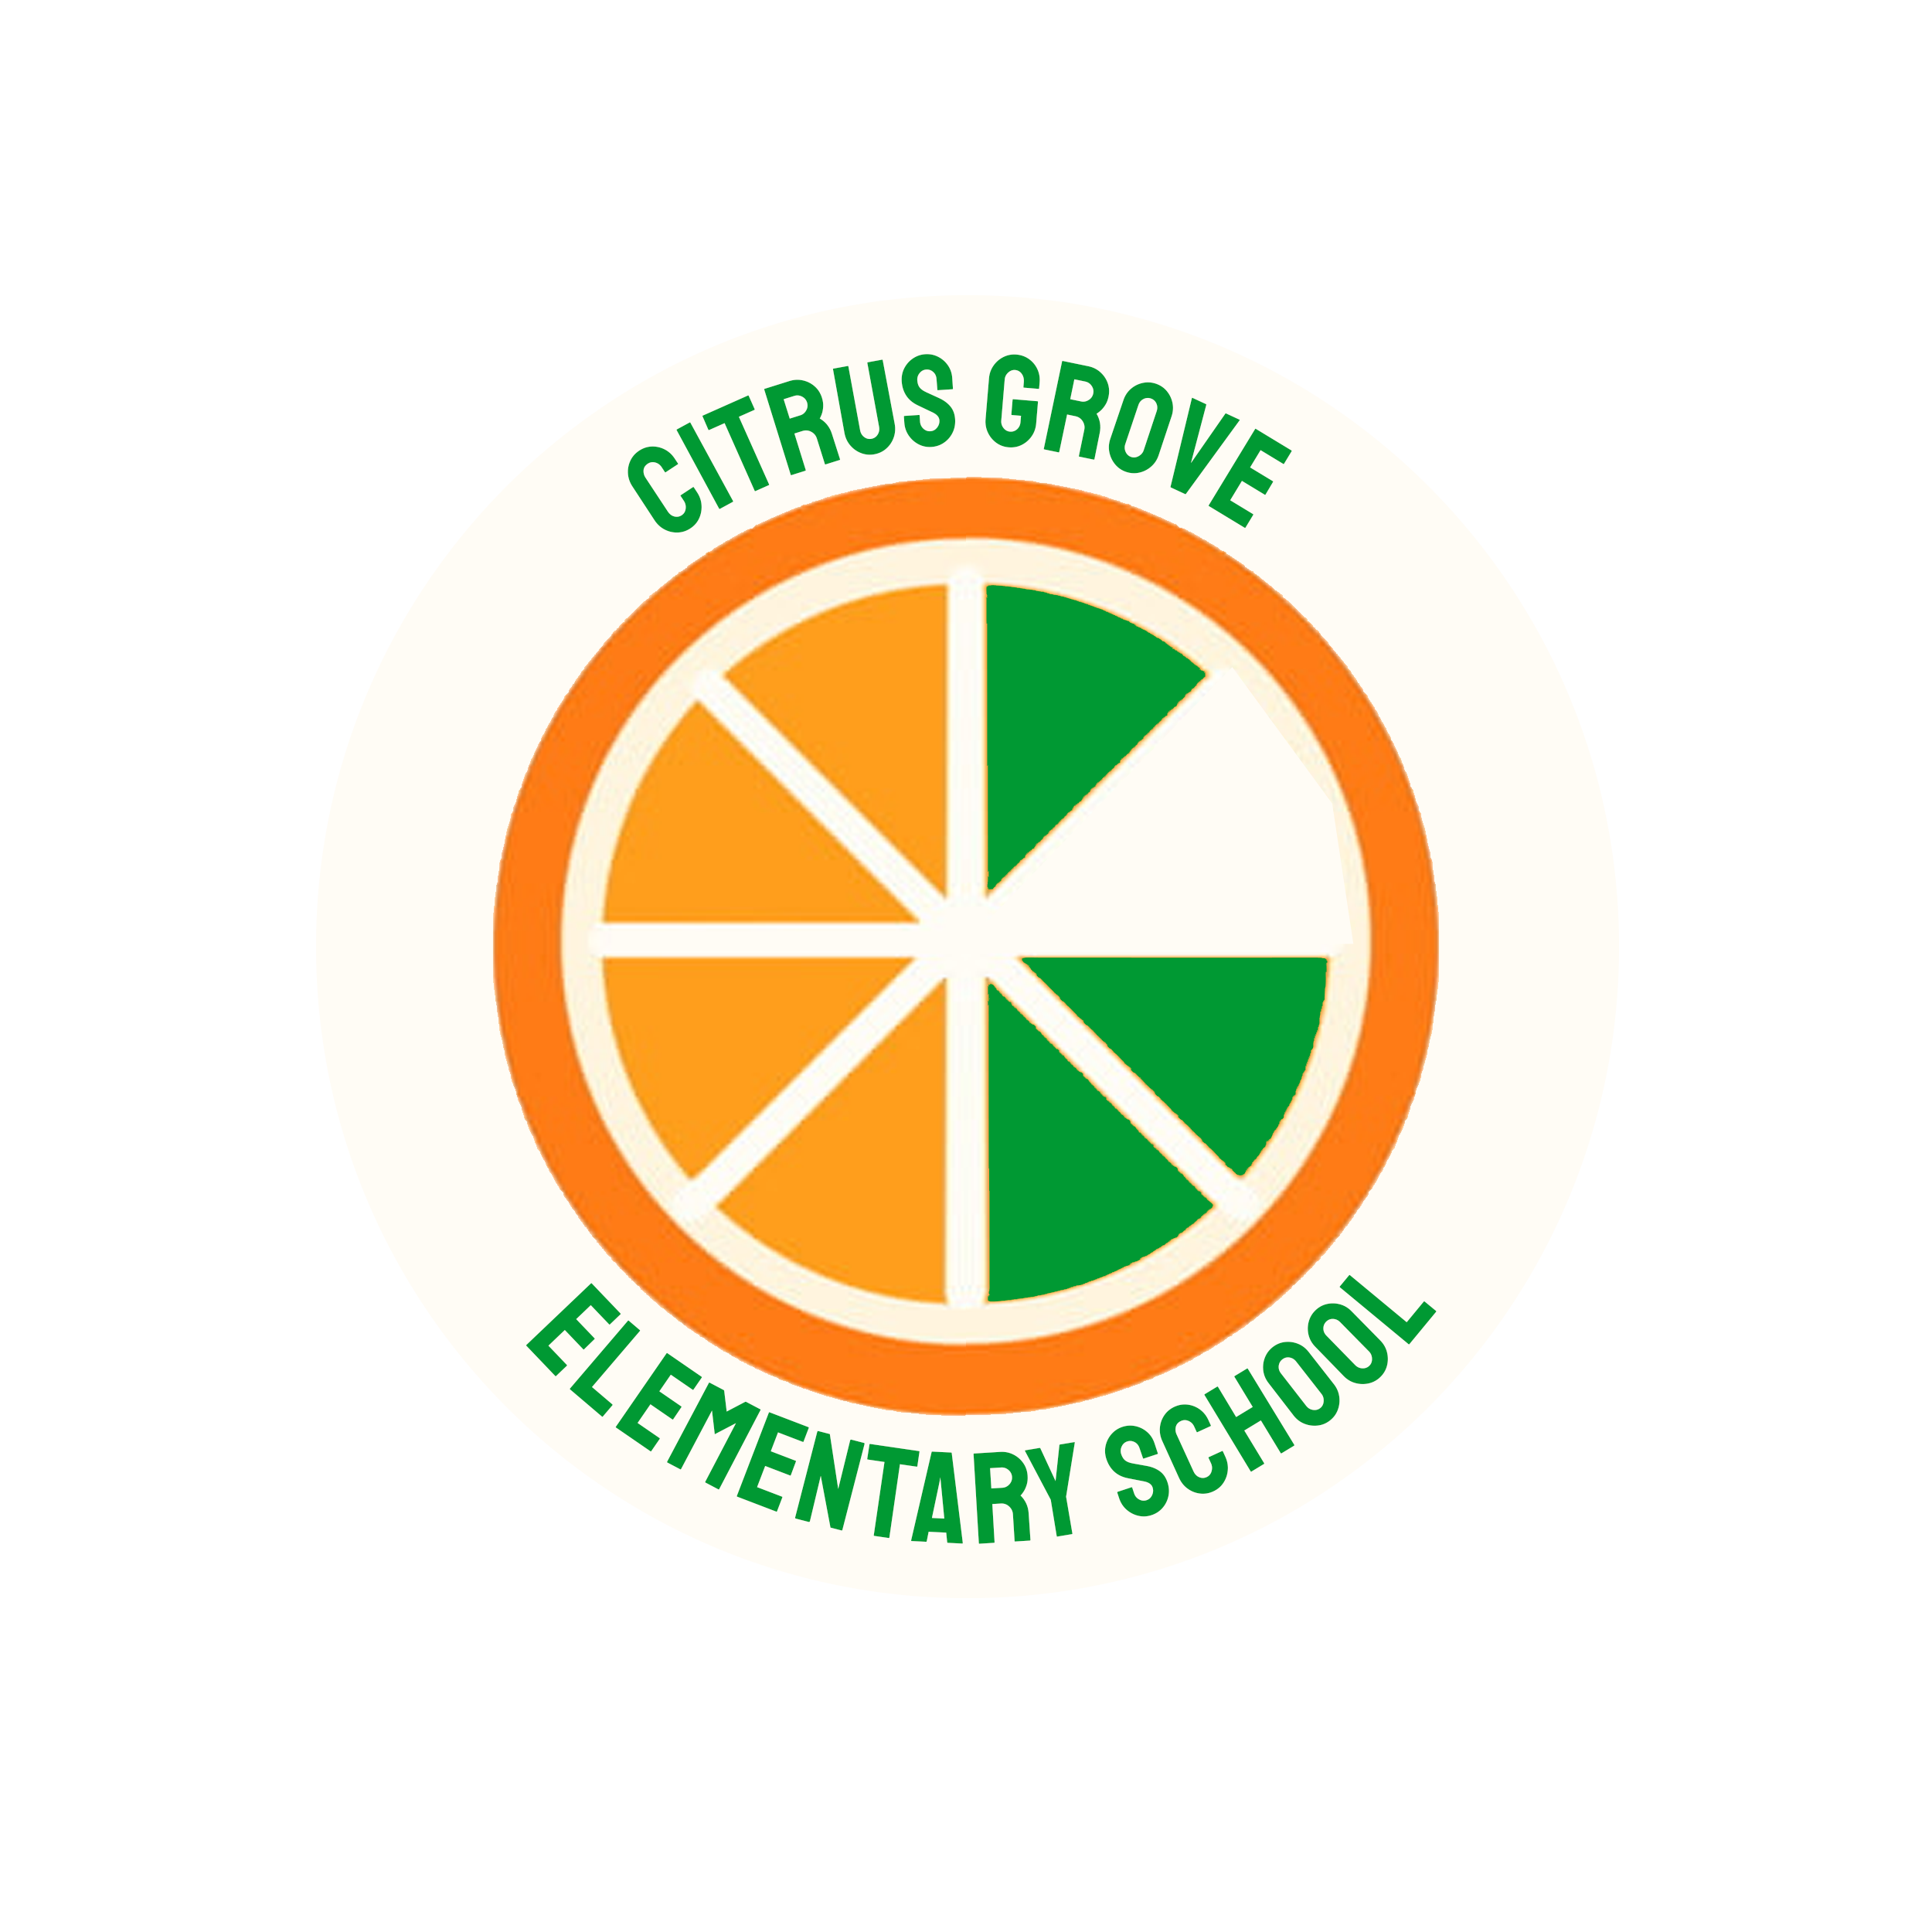 citrus grove logo